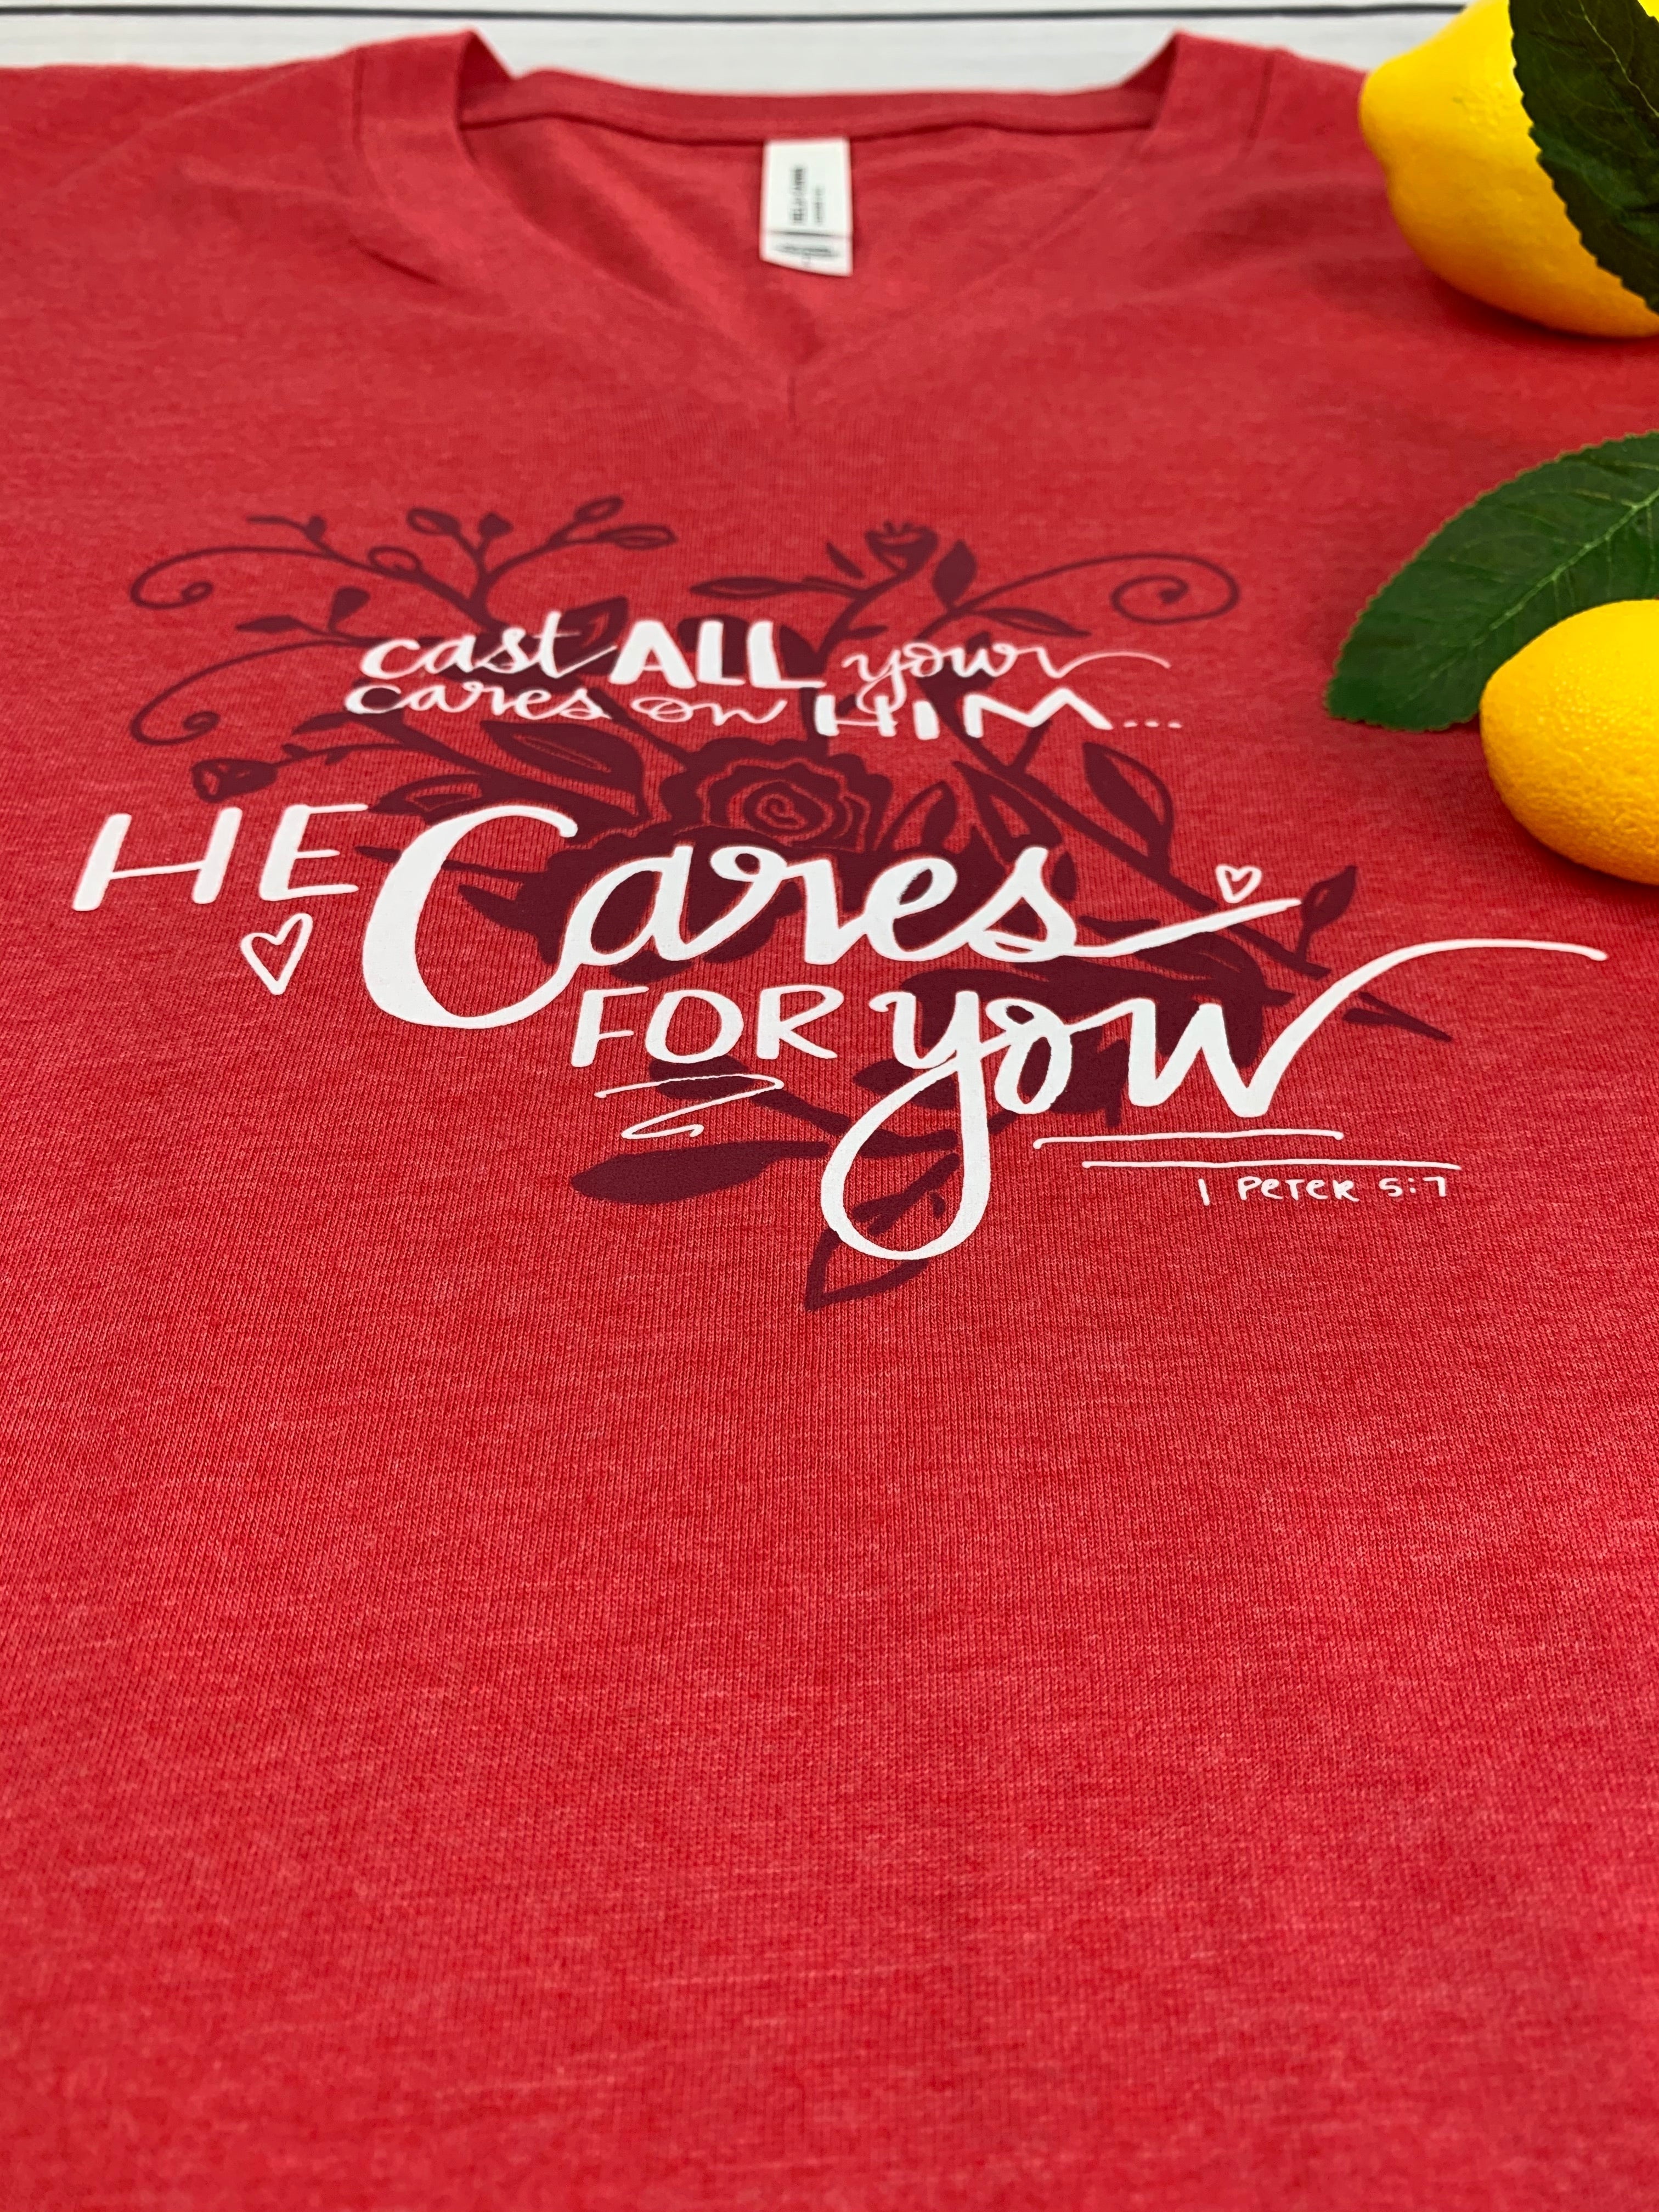 Cast your Cares - 1 Peter 5:7 - T-Shirt